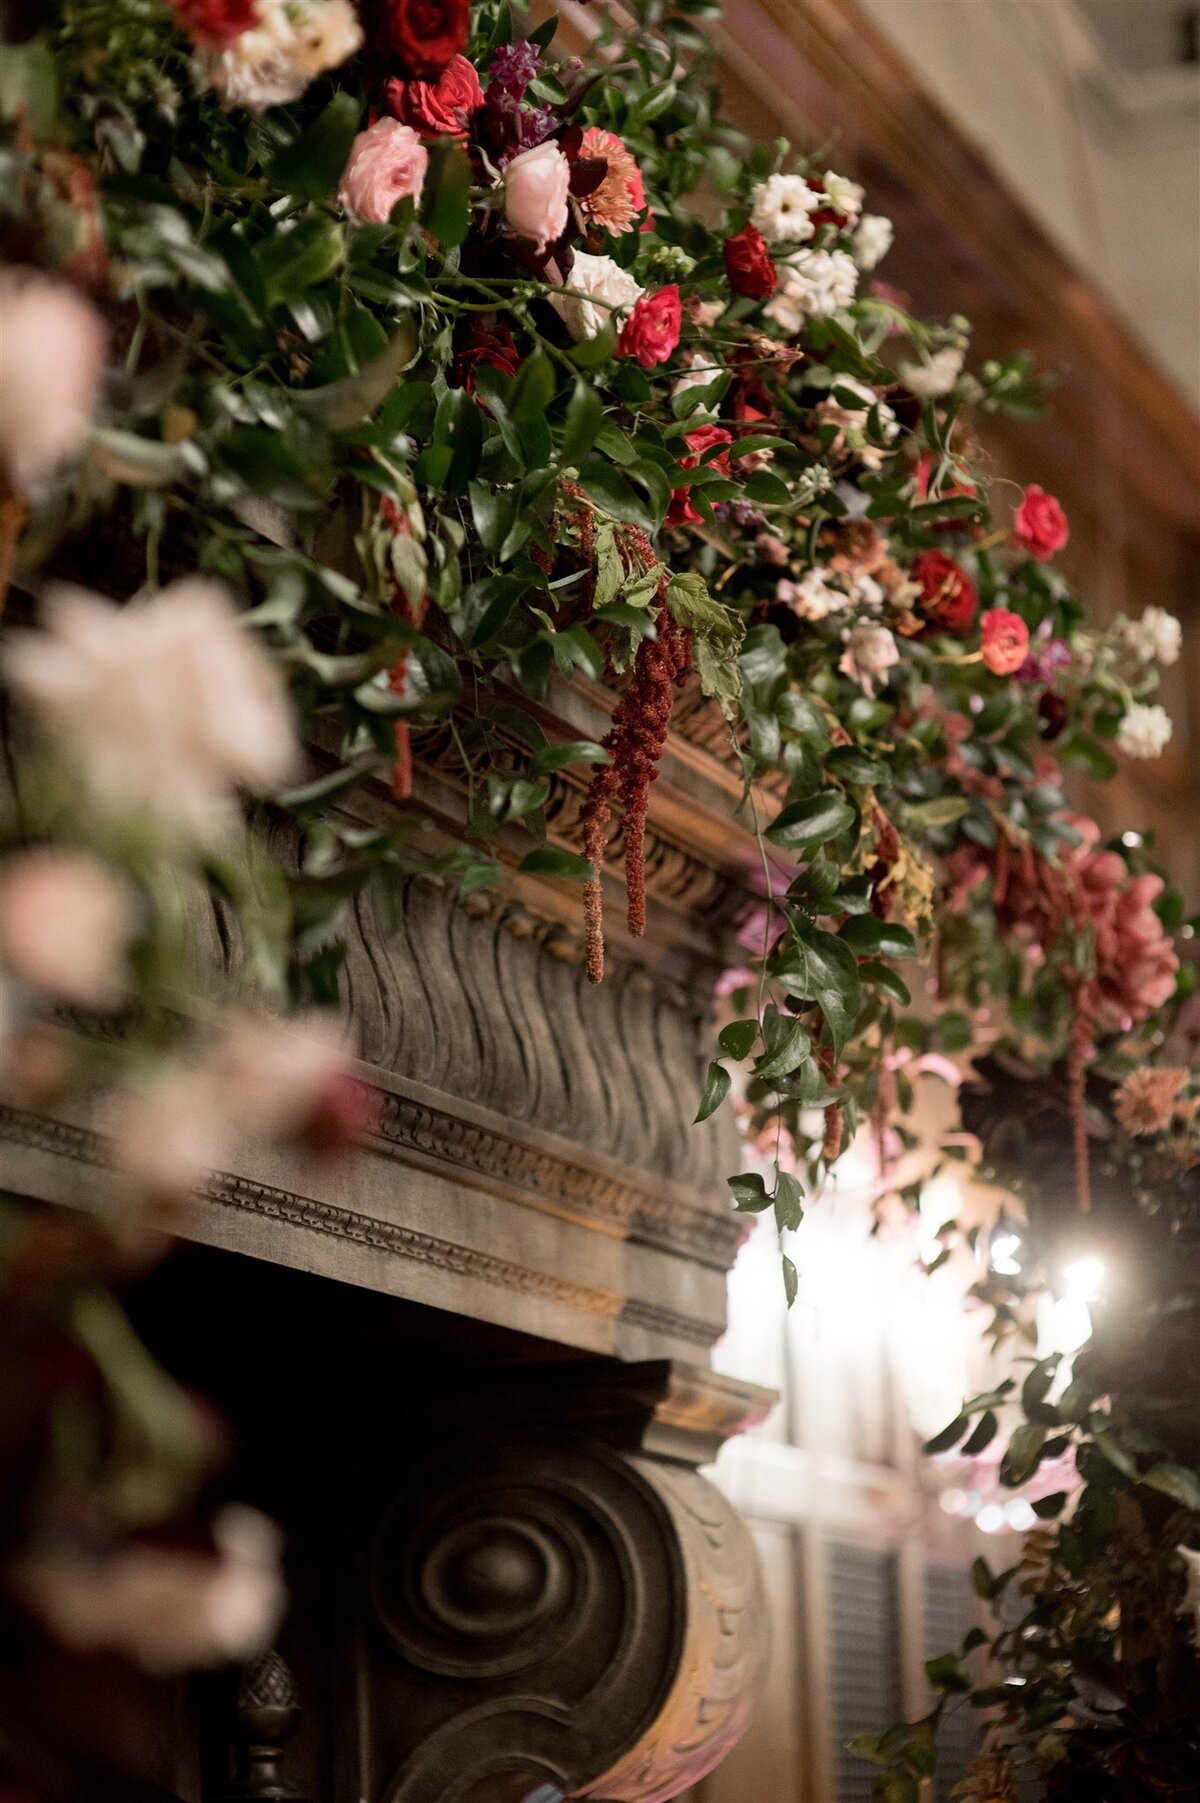 Kate-Murtaugh-Events-Harvard-Club-moody-fall-florals-mantle-fireplace-Boston-wedding-planner